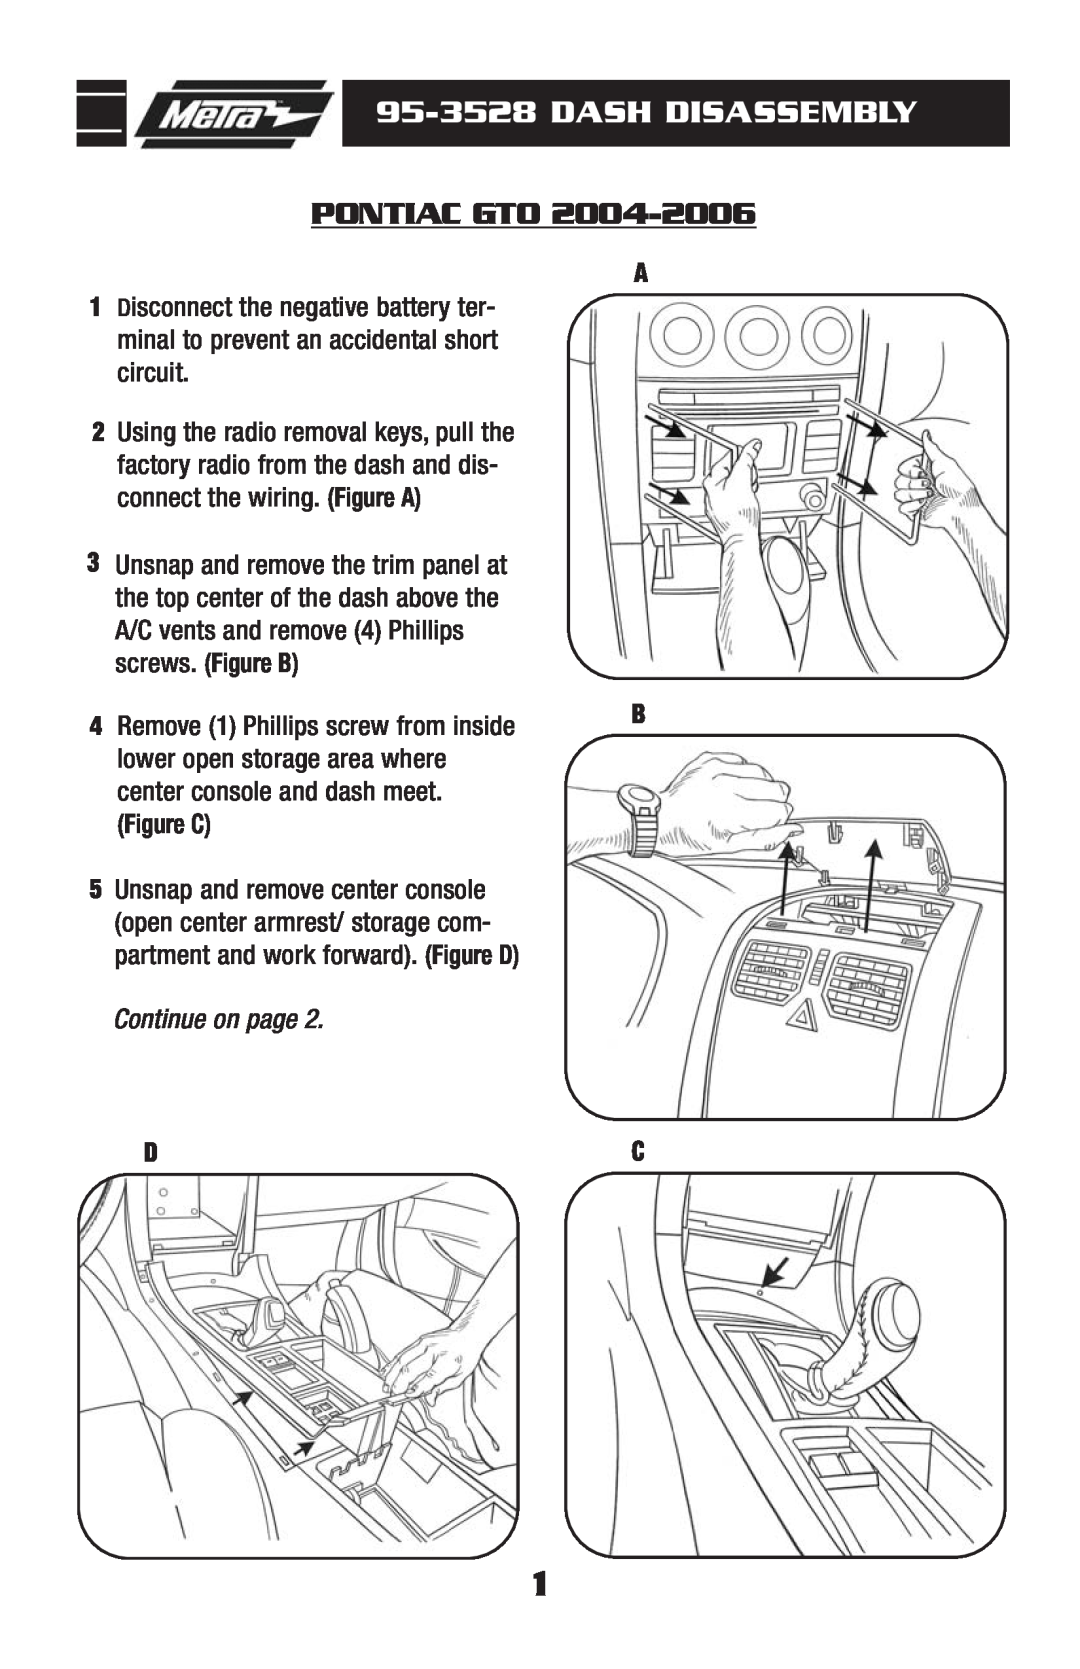 Pontiac 95-3528 manual Dash Disassembly, Pontiac Gto, Figure C, Continue on page 